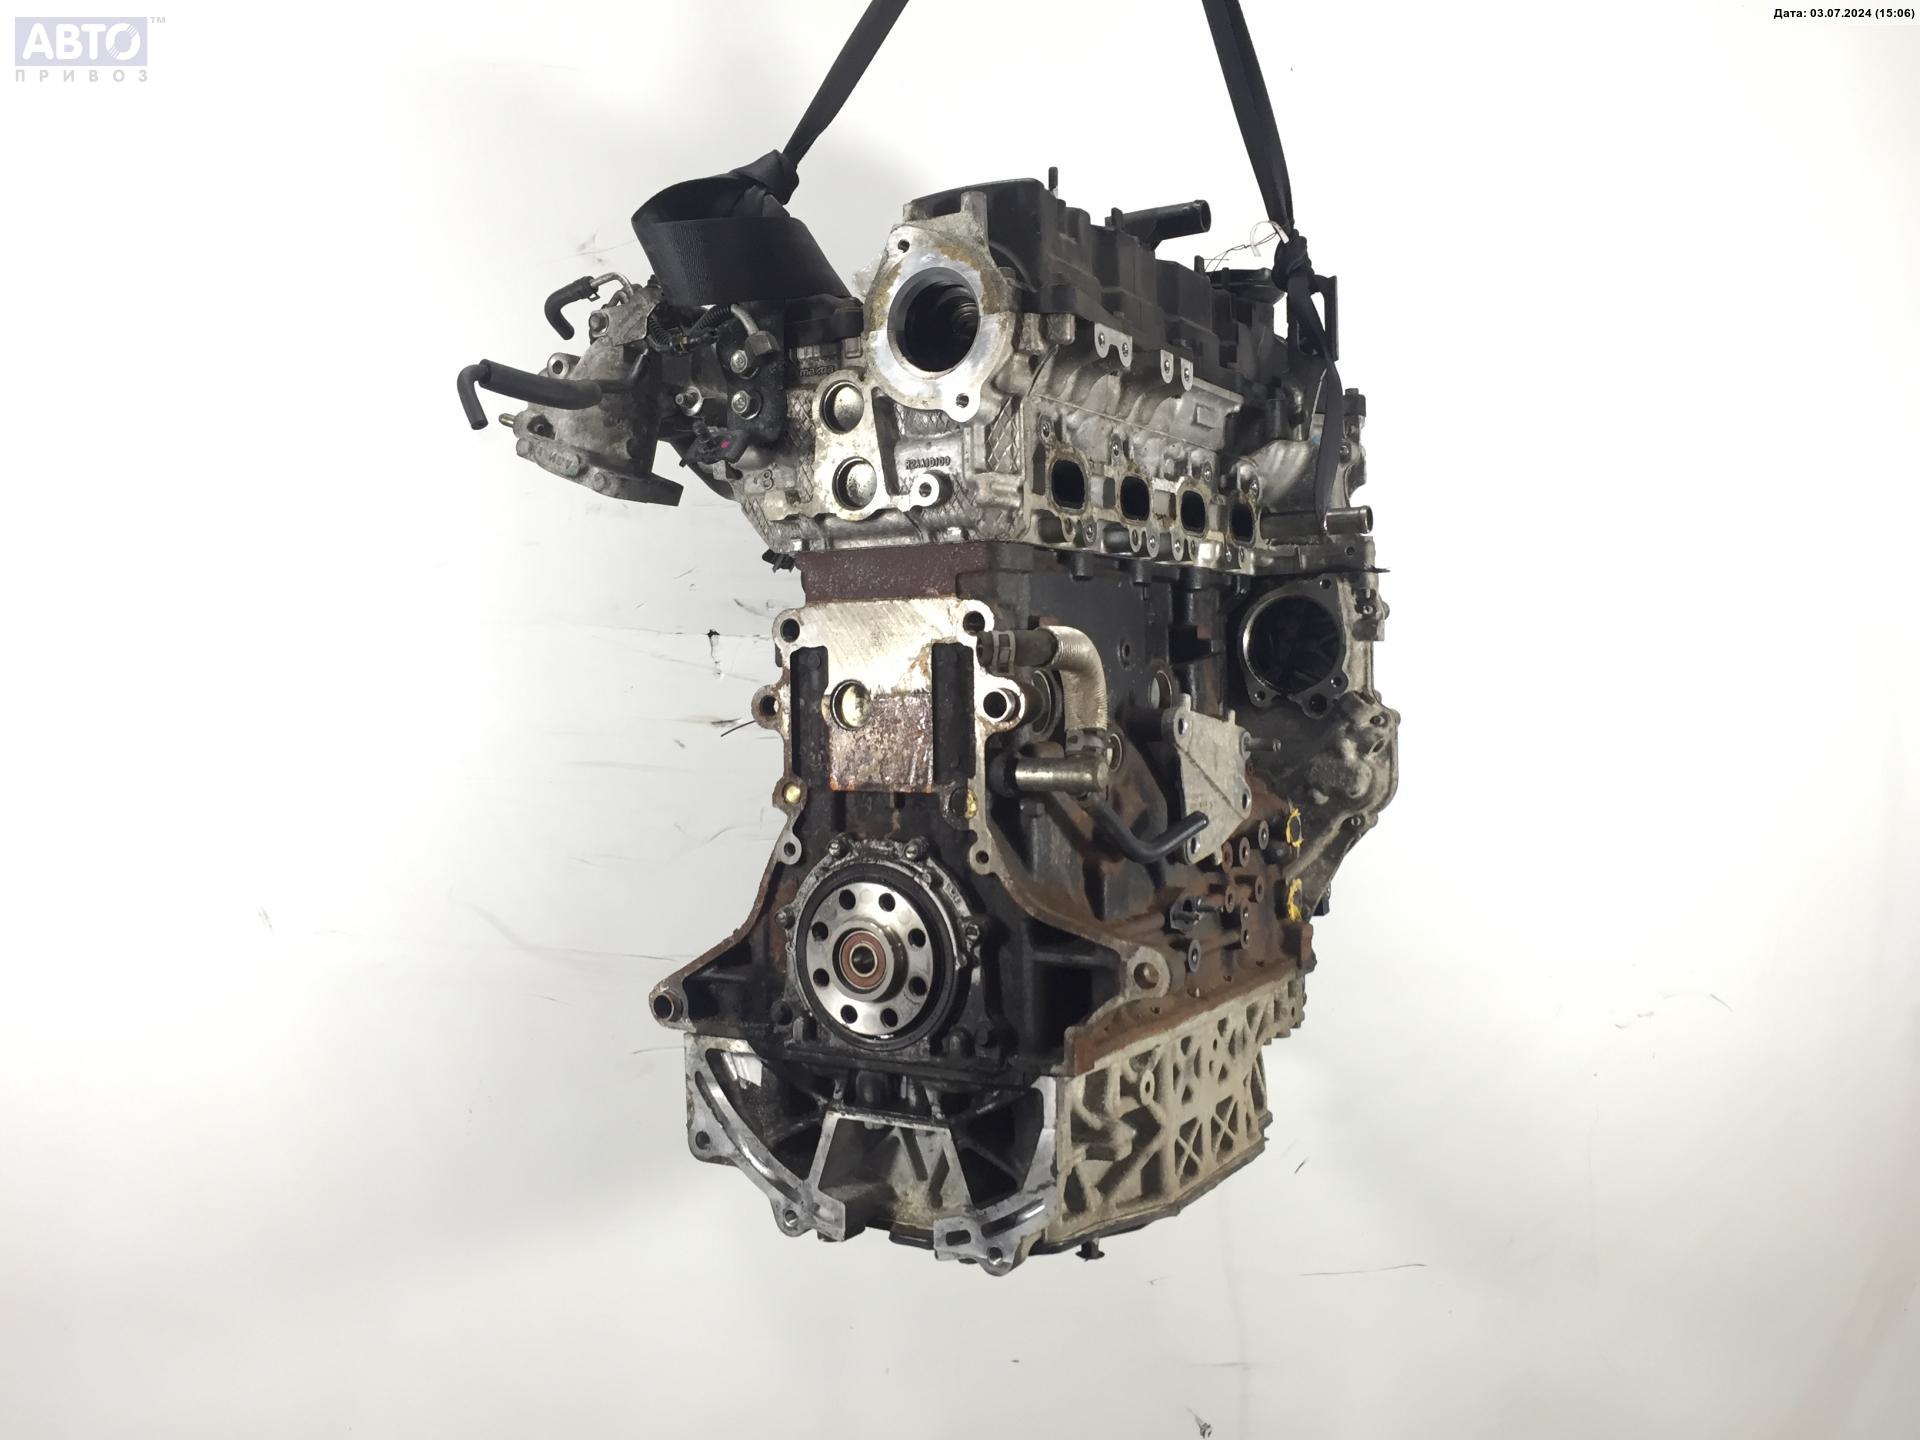 Двигатели Атенза Мазда: технические характеристики, надежность